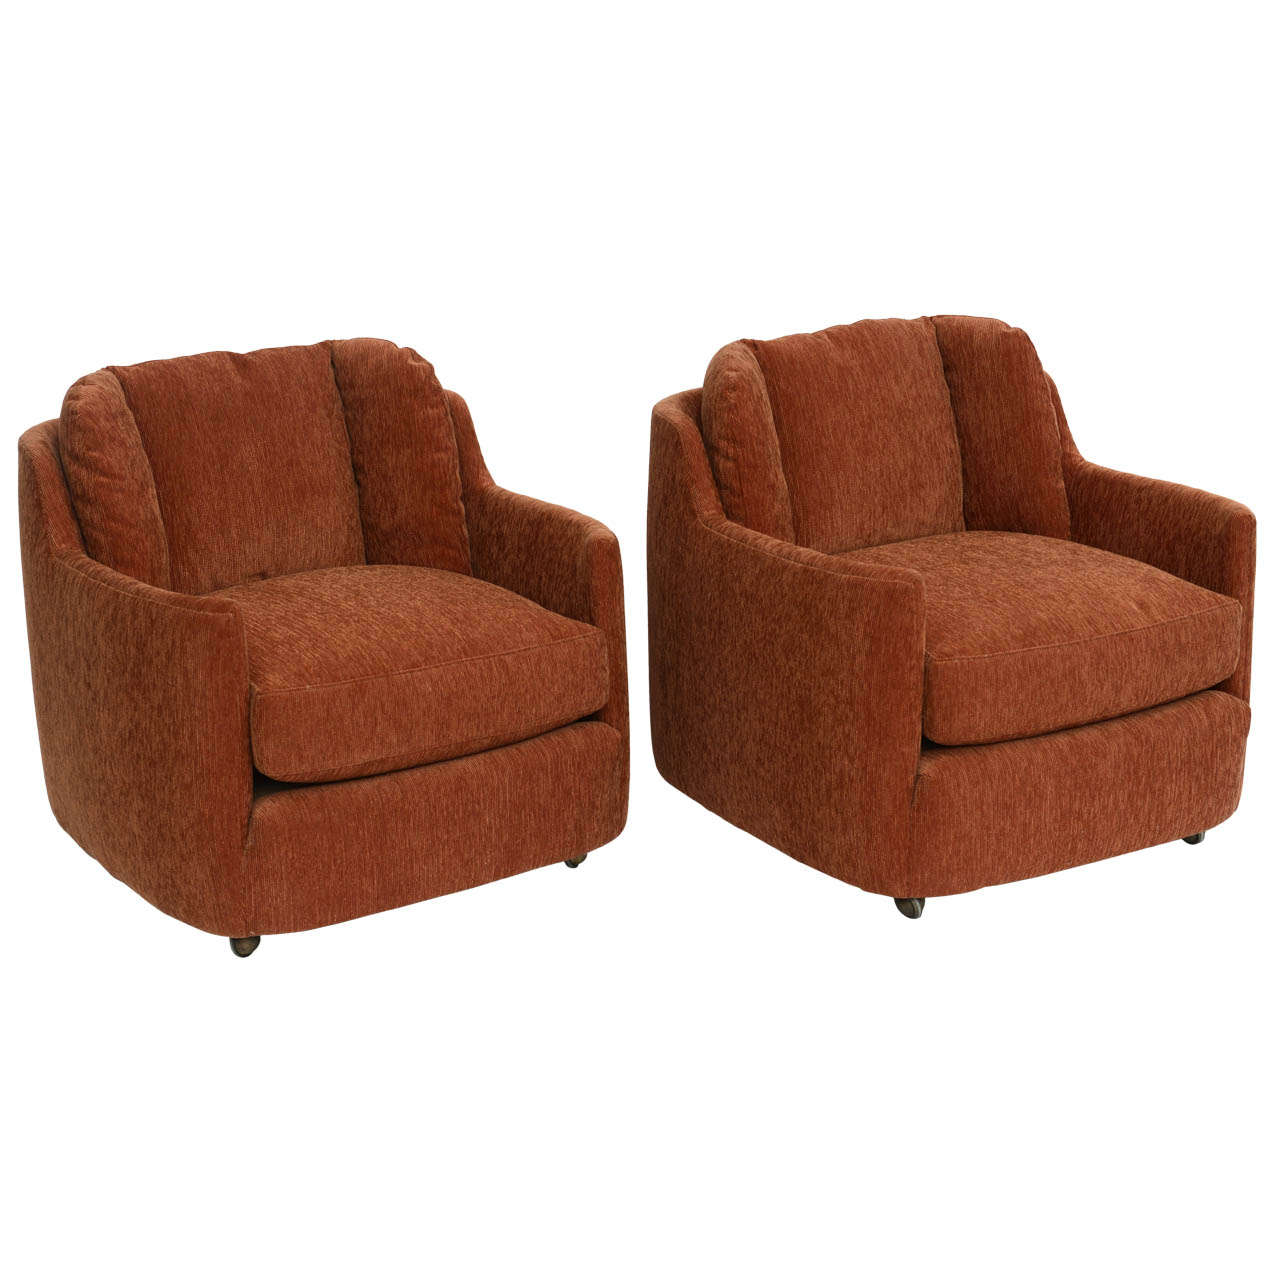 Sumptuous Henredon Folio 500 Lounge Chairs